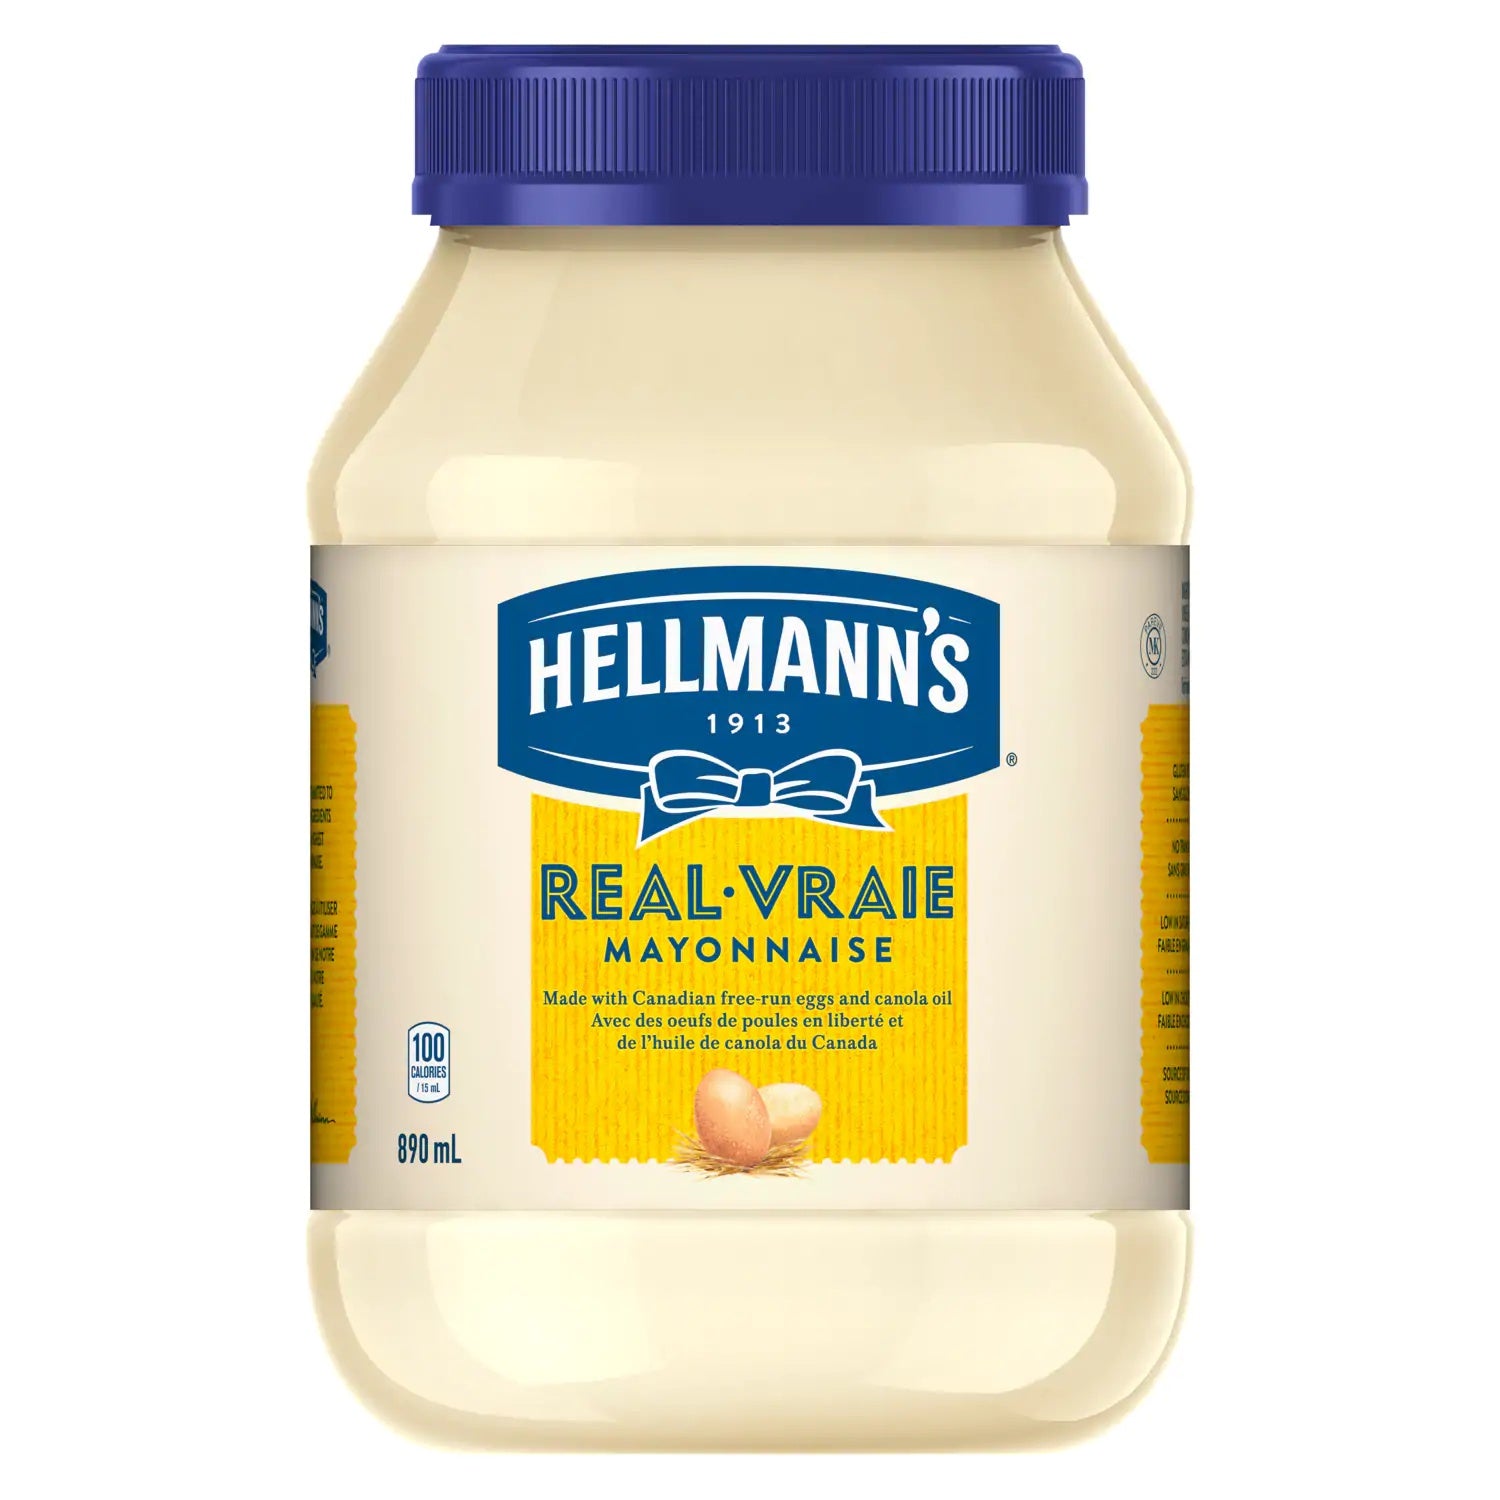 Hellmann's Regular Mayonnaise 890ml